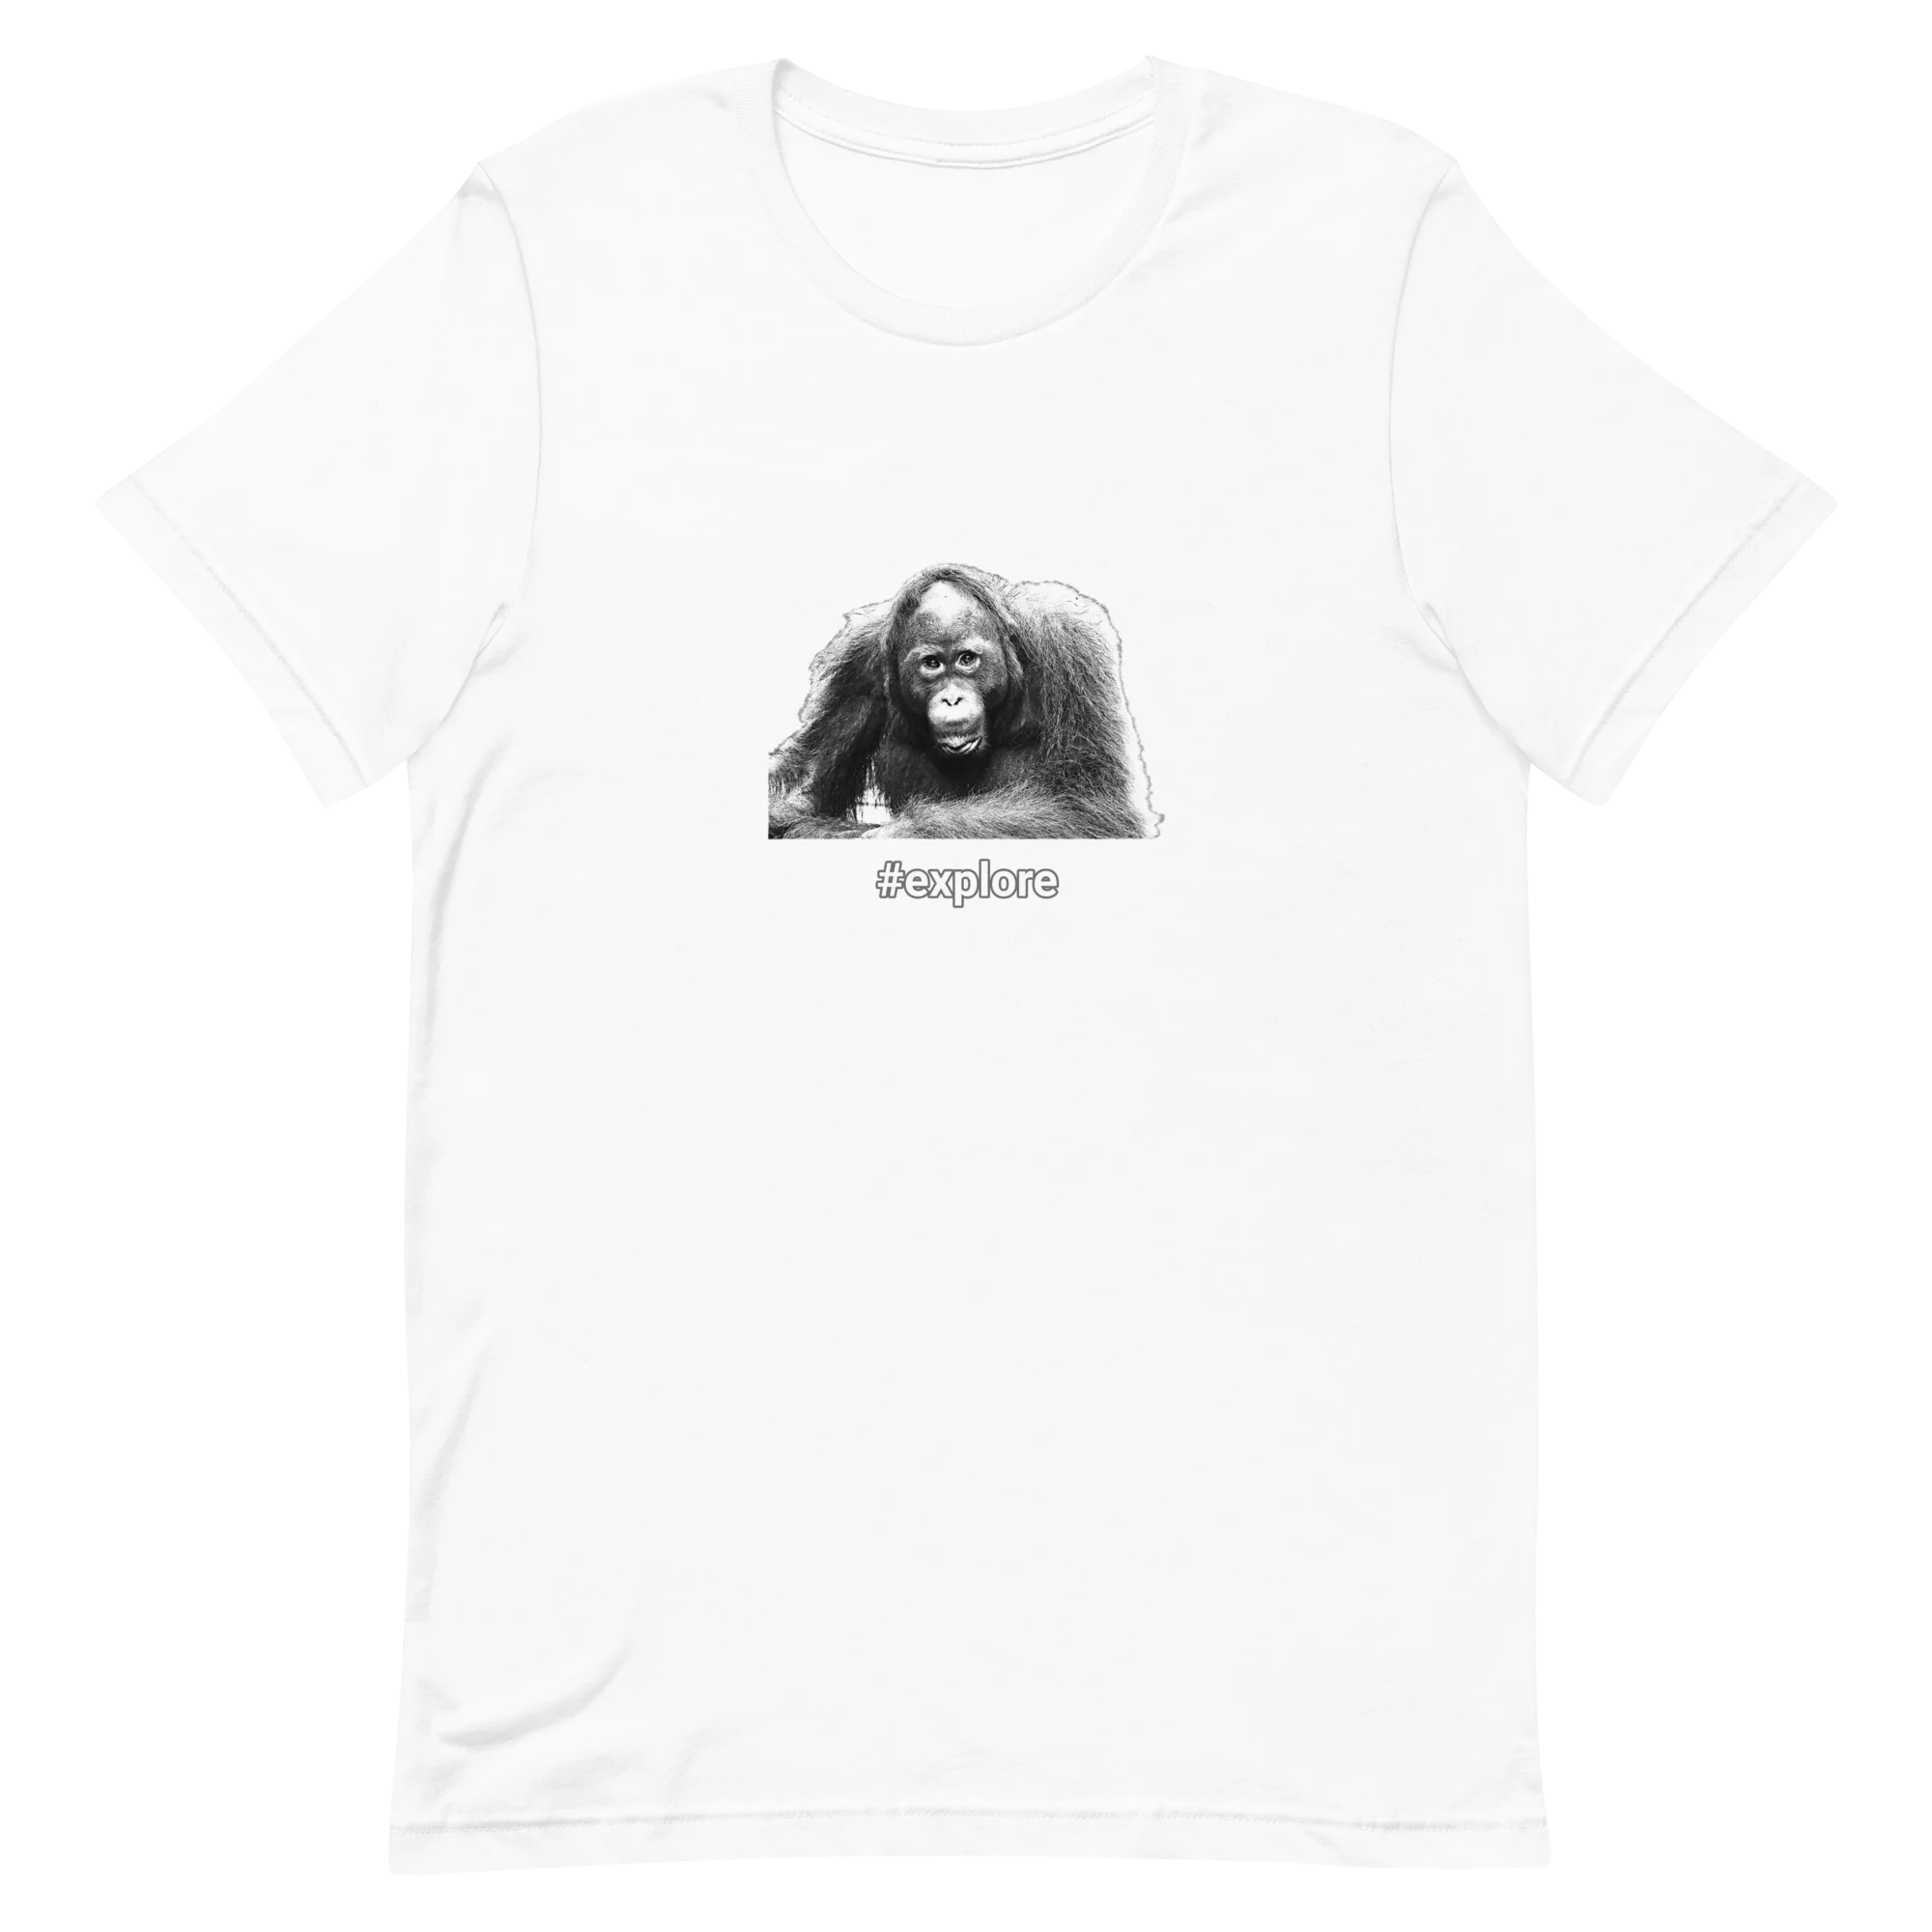 T-Shirt featuring an image of a orangutan